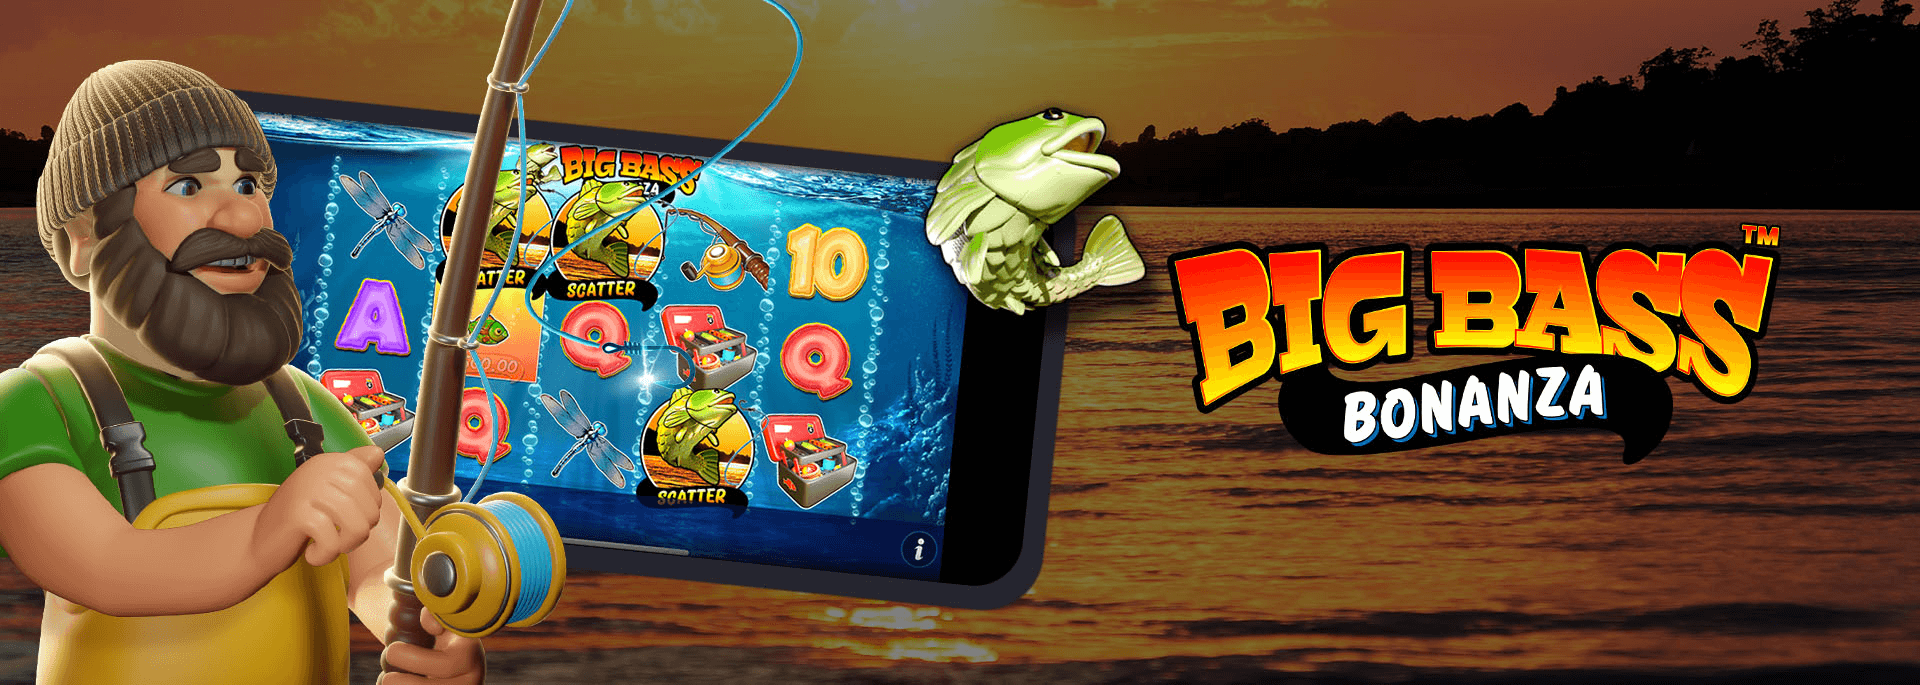 Big Bass Bonanza casino game on mobile with character fishing